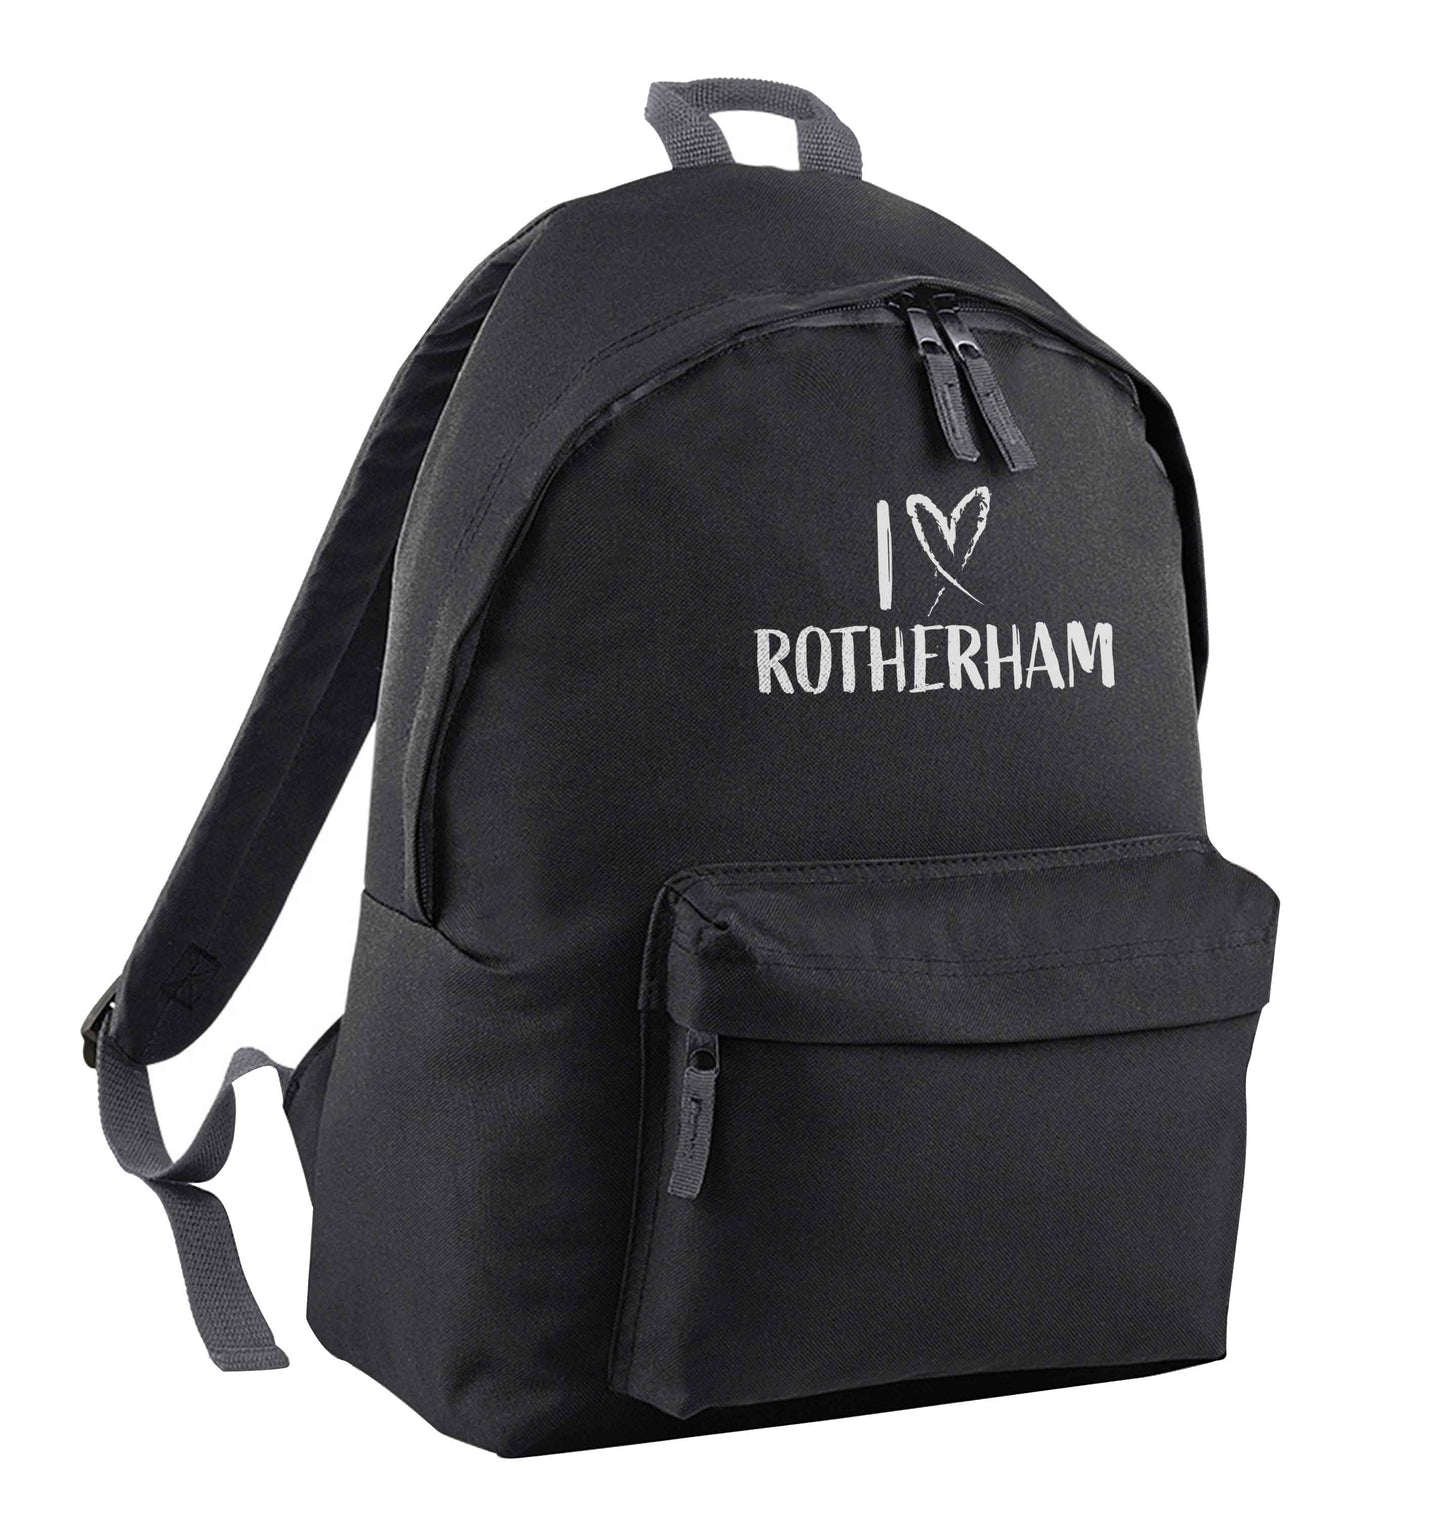 I love Rotherham black adults backpack